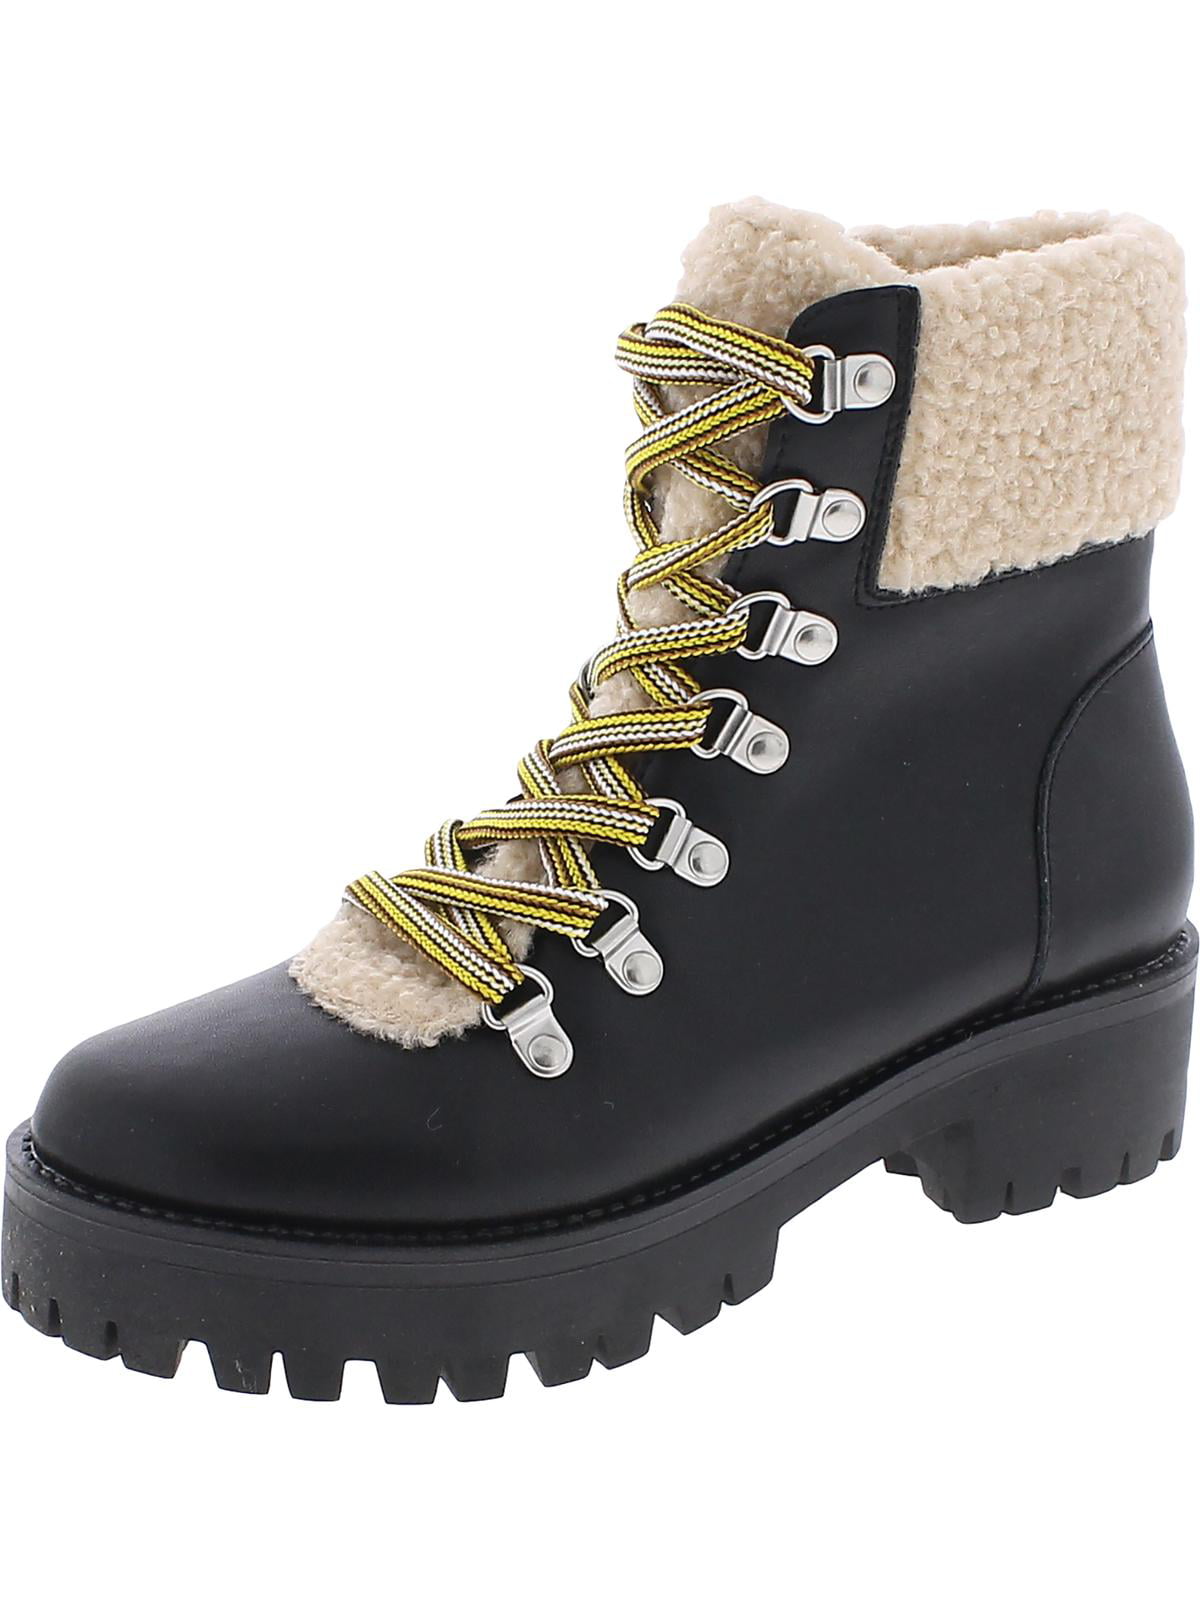 Steve Madden Womens Faux Leather Winter Boots Black 6.5 Medium (B,M) - Walmart.com